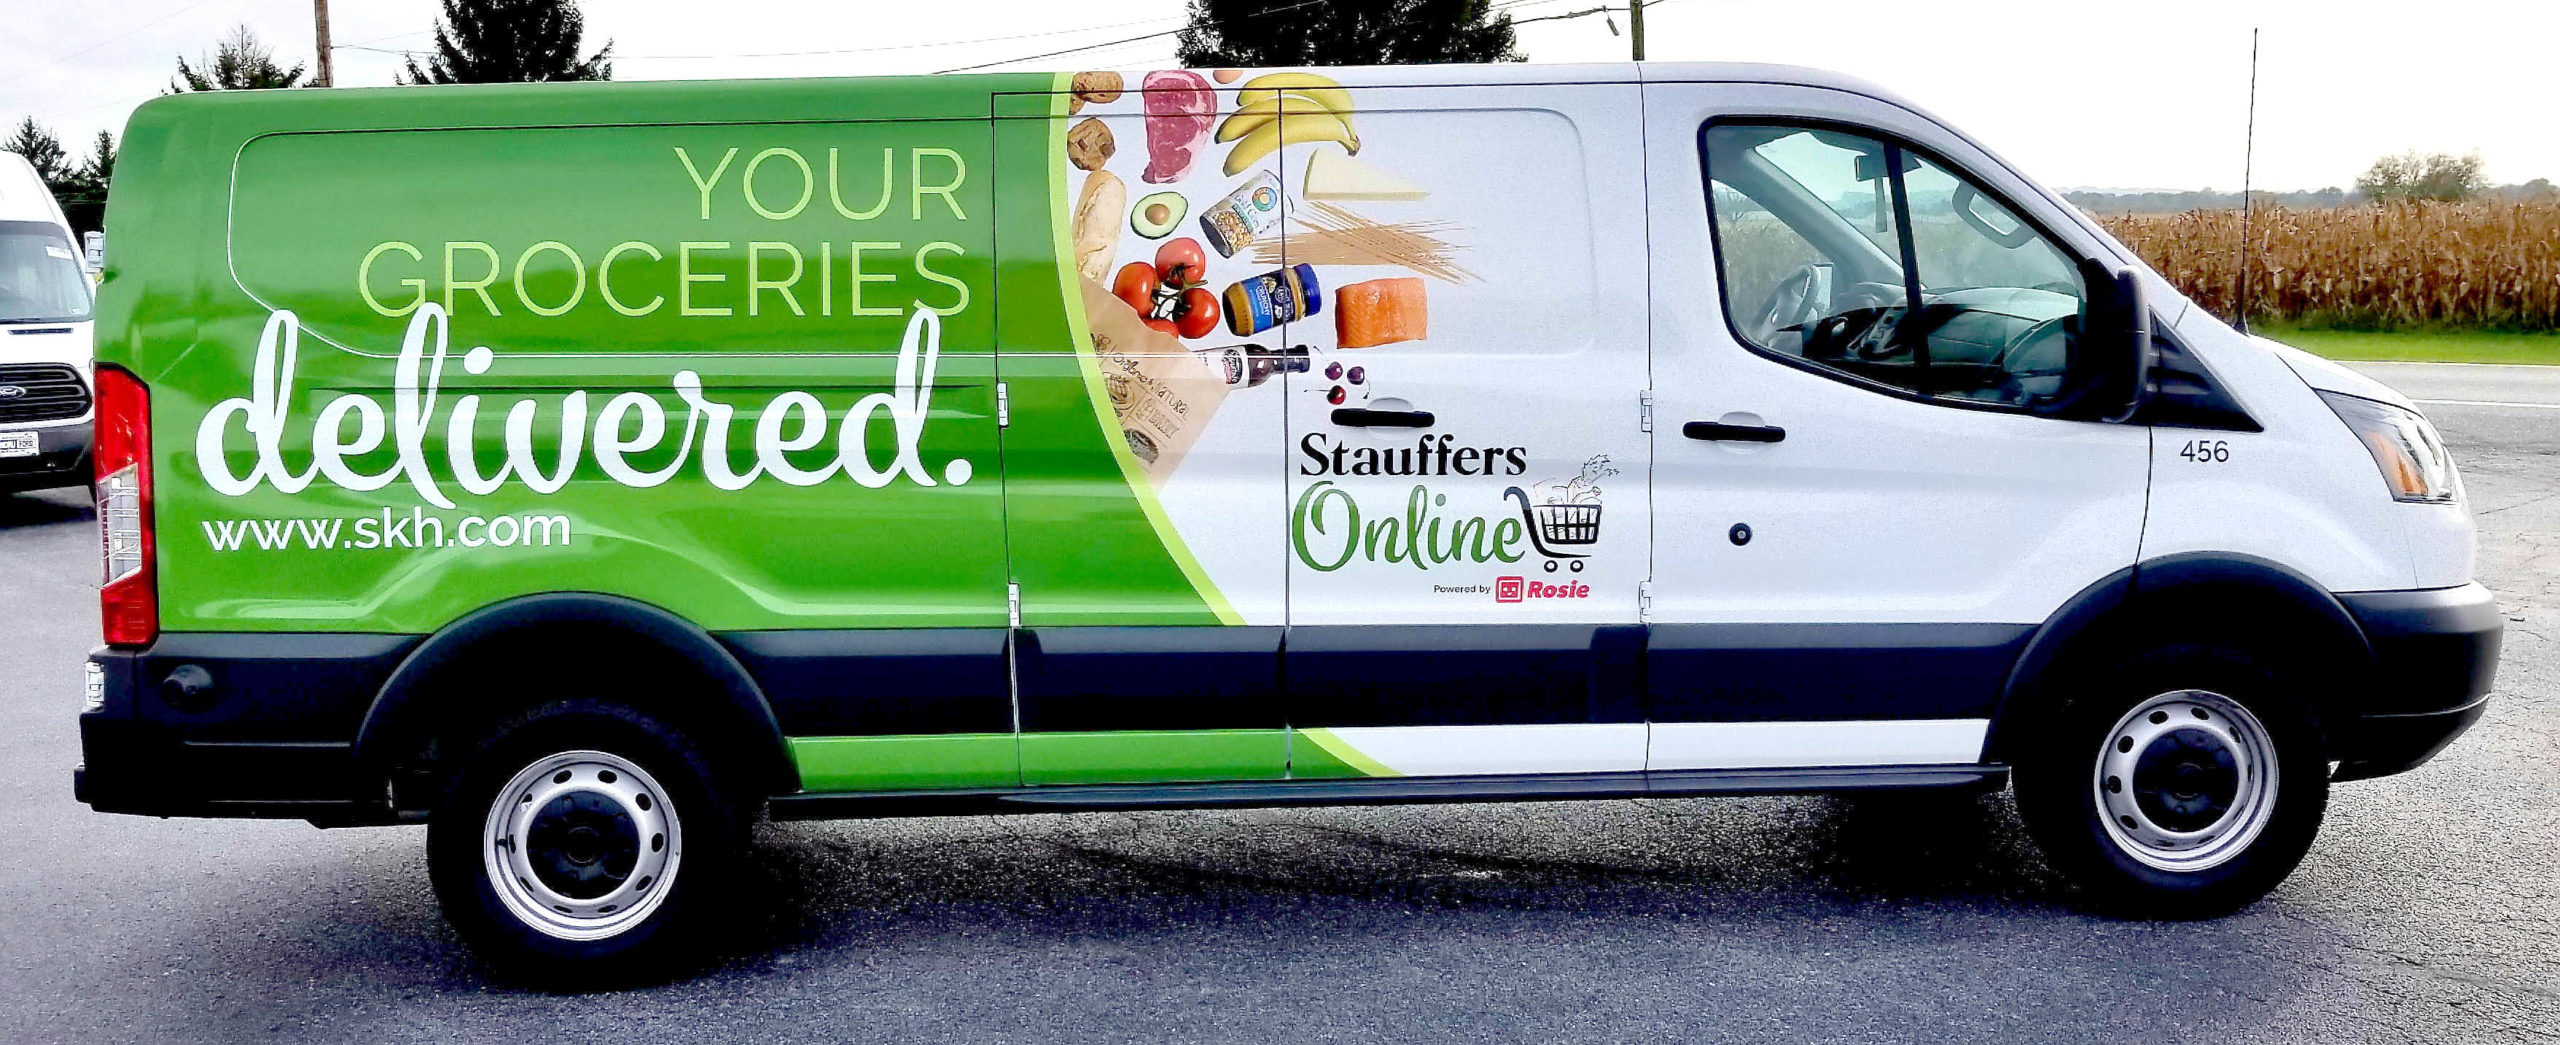 rosie online grocery delivery van